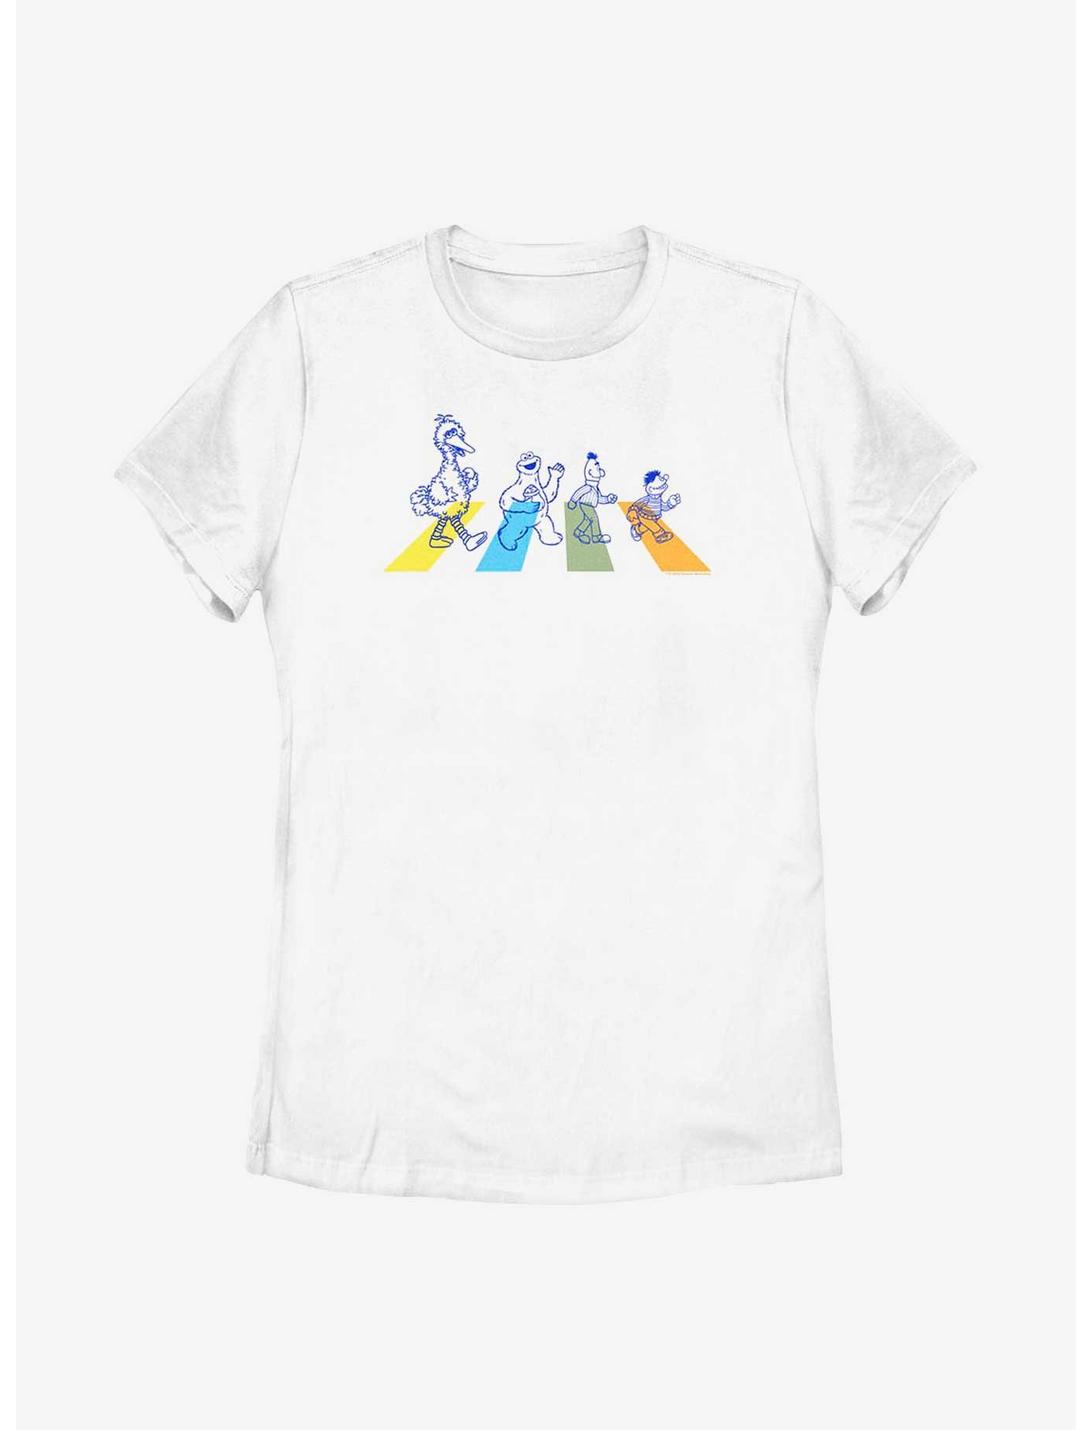 Sesame Street Team Abbey Road Womens T-Shirt, WHITE, hi-res